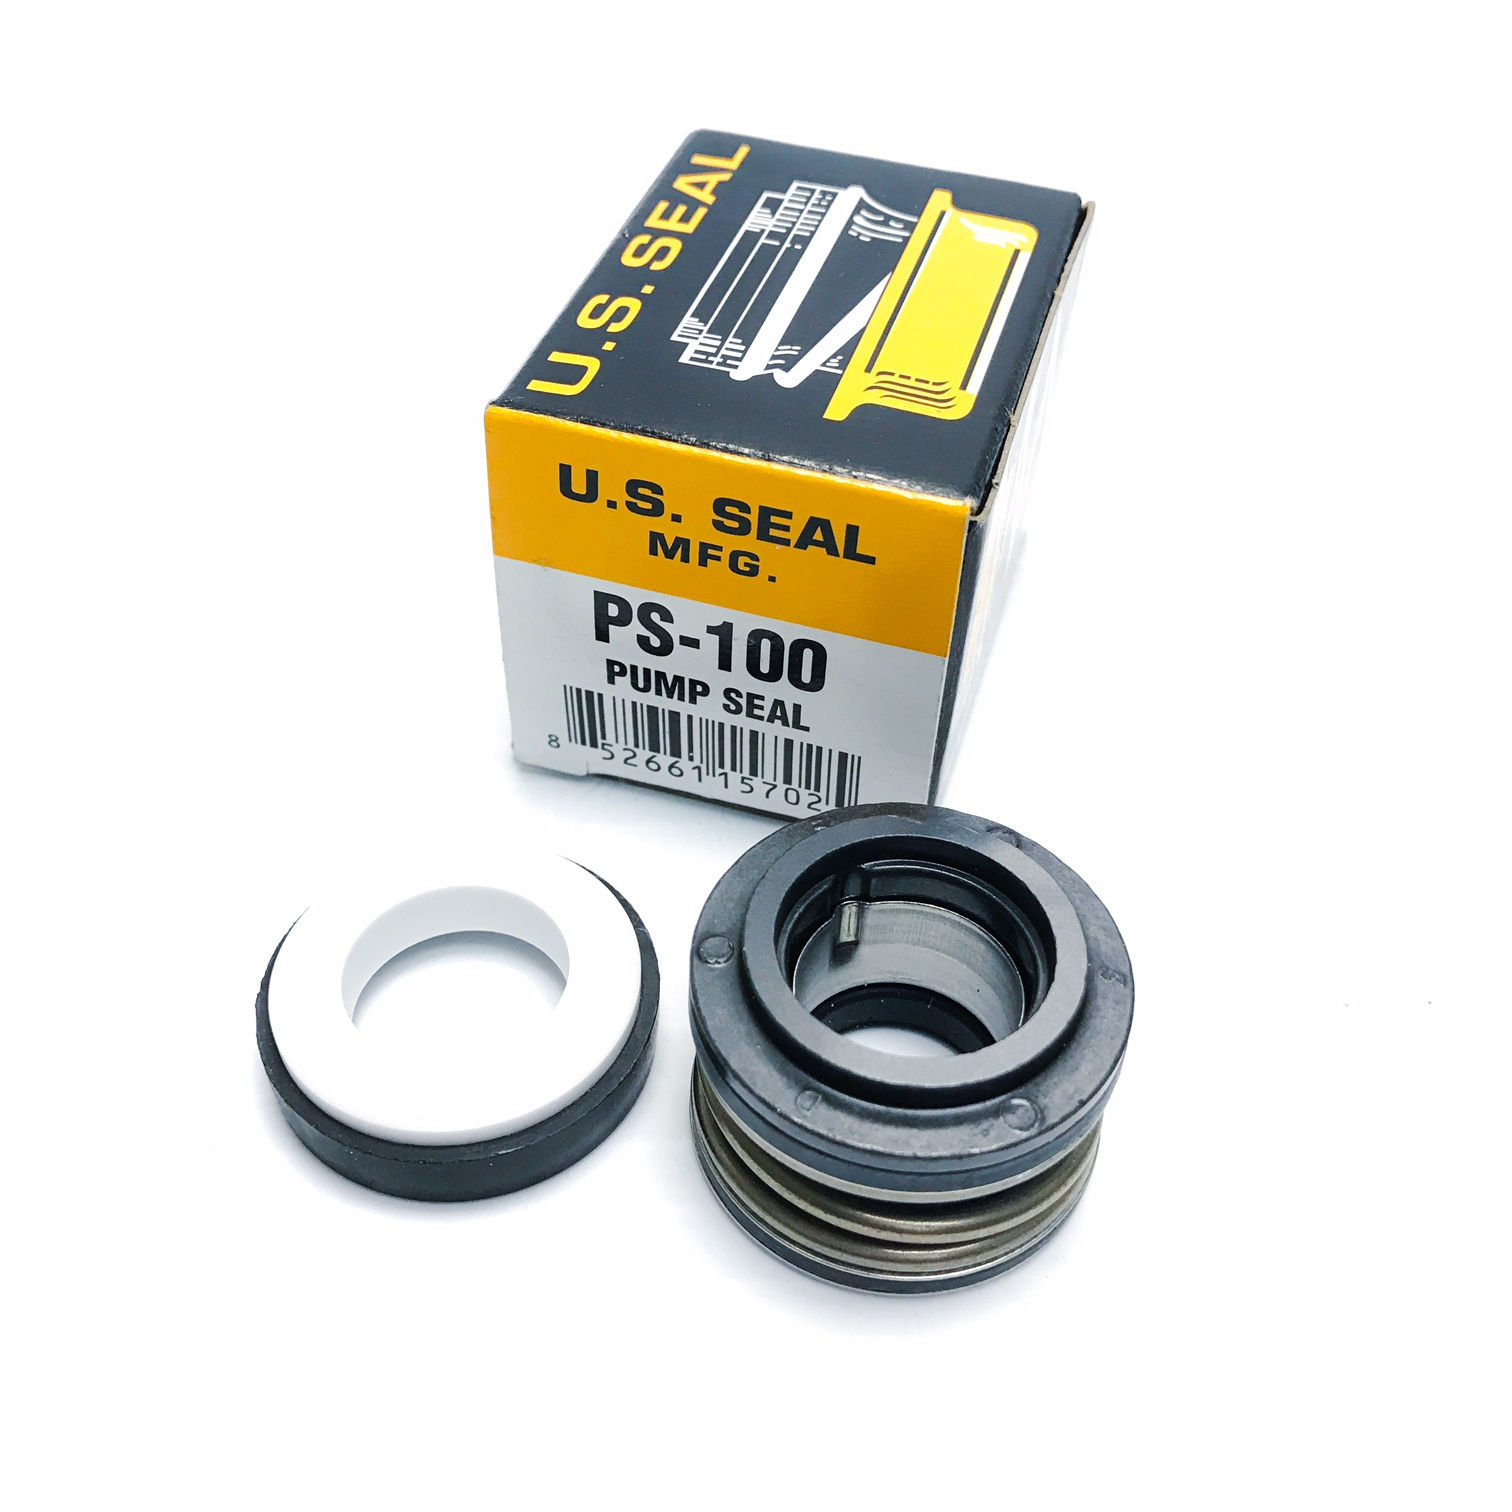 PS-100 U.S. Seal Mfg 5/8' Pump Seal 1